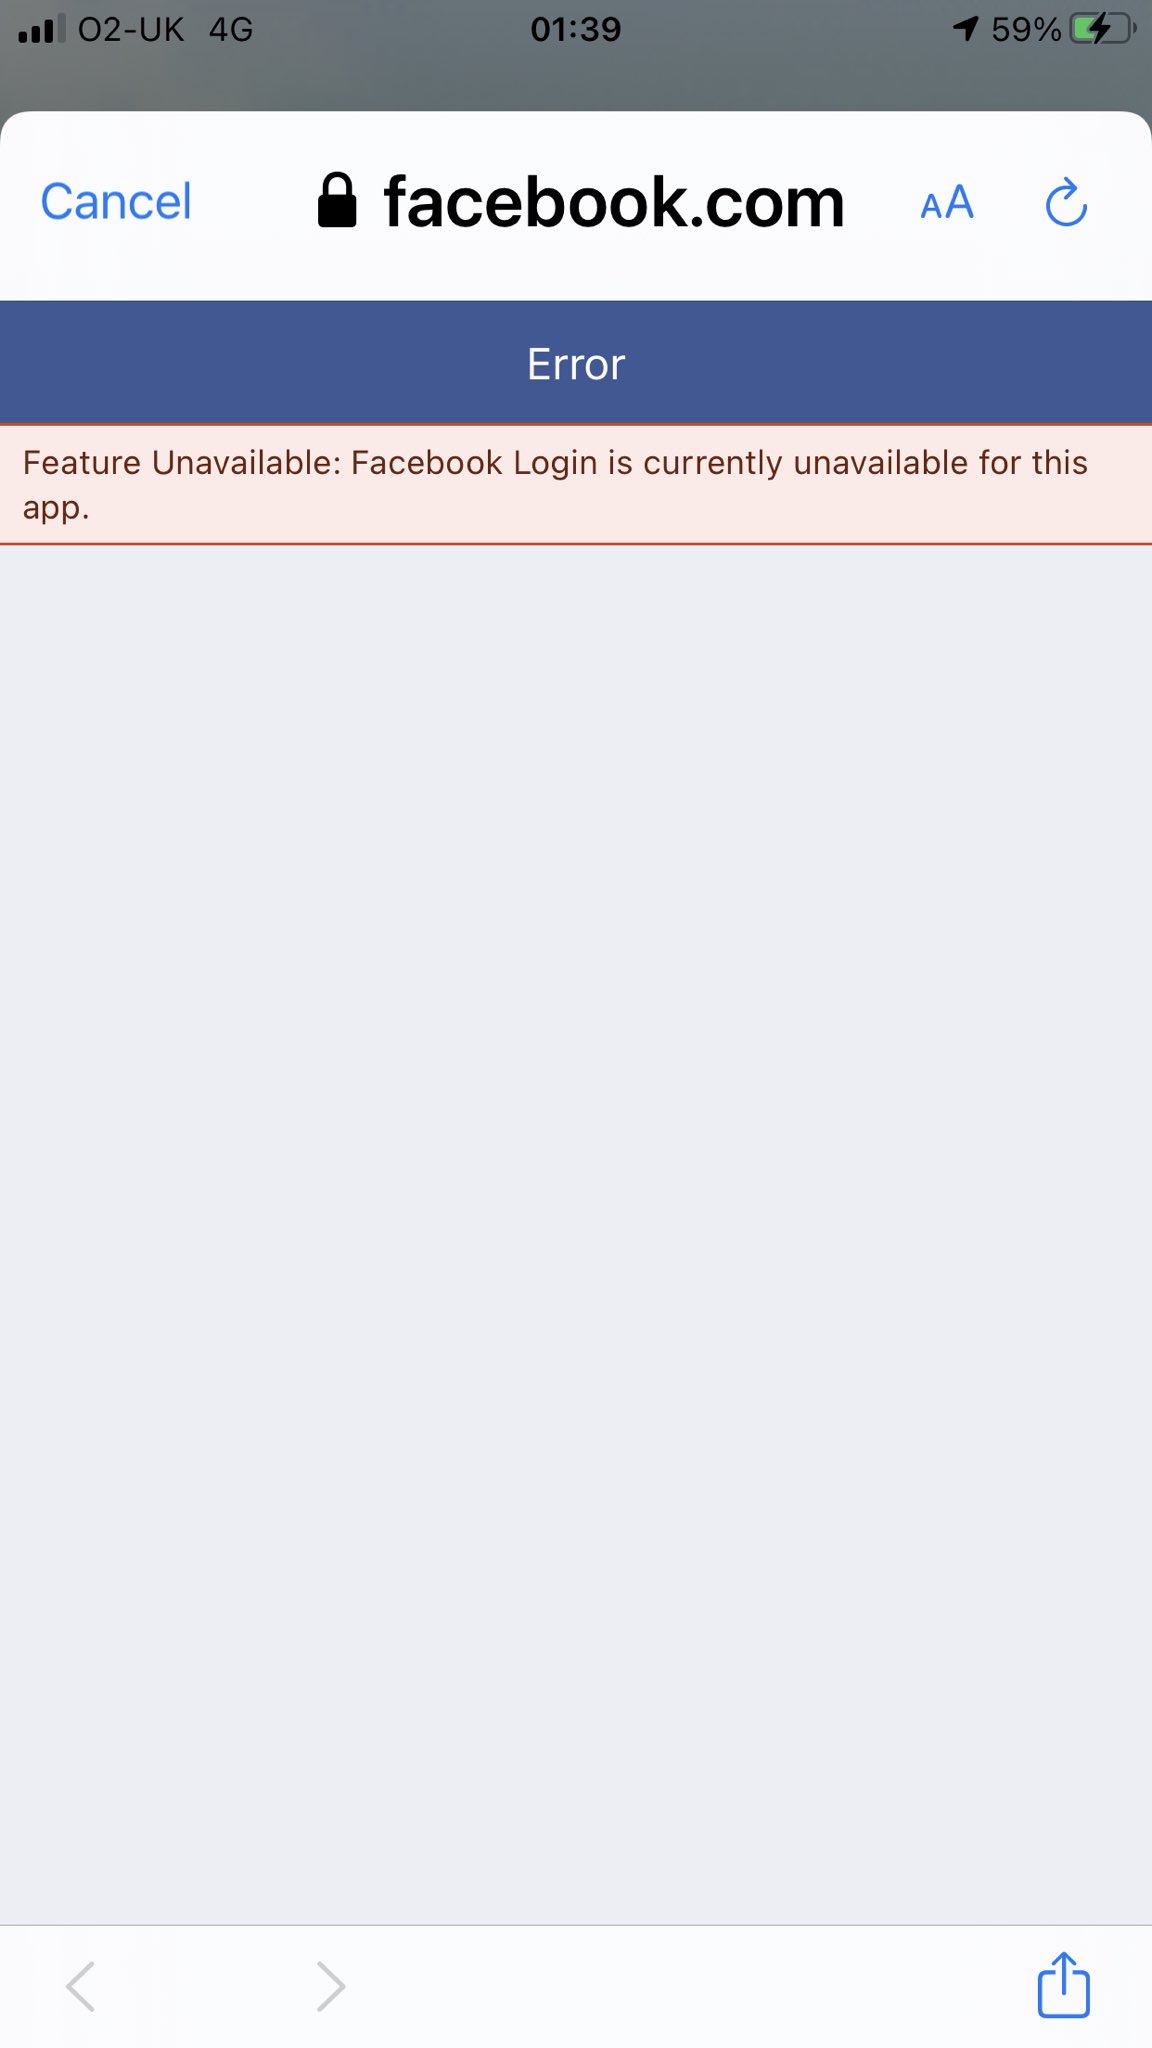 Facebook app not active problem